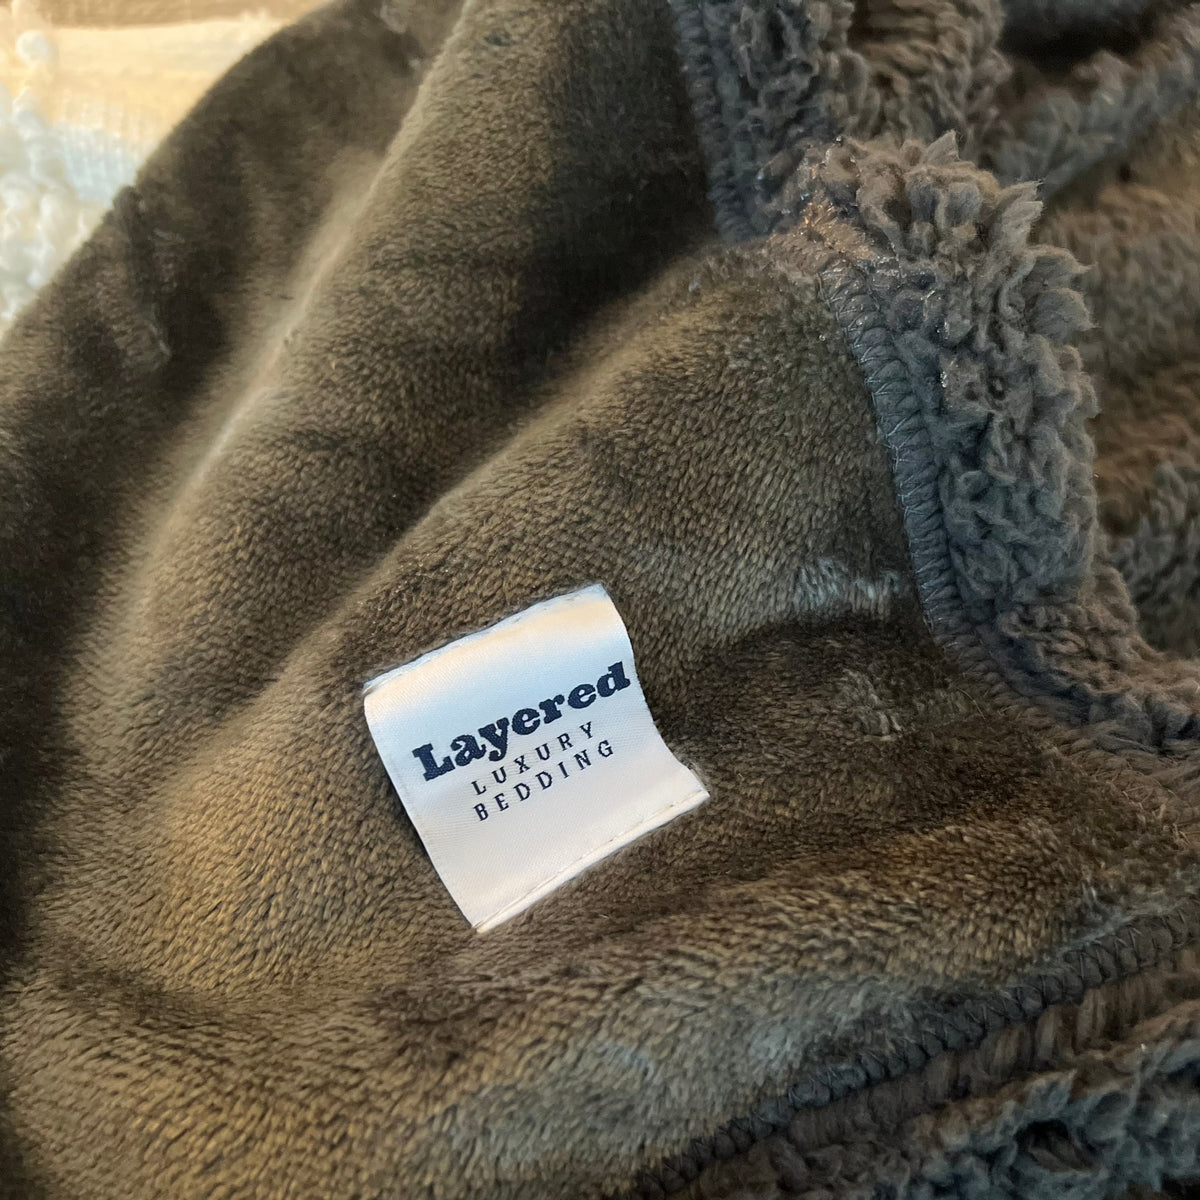 Layered Blankets - The #1 Waterproof Blanket